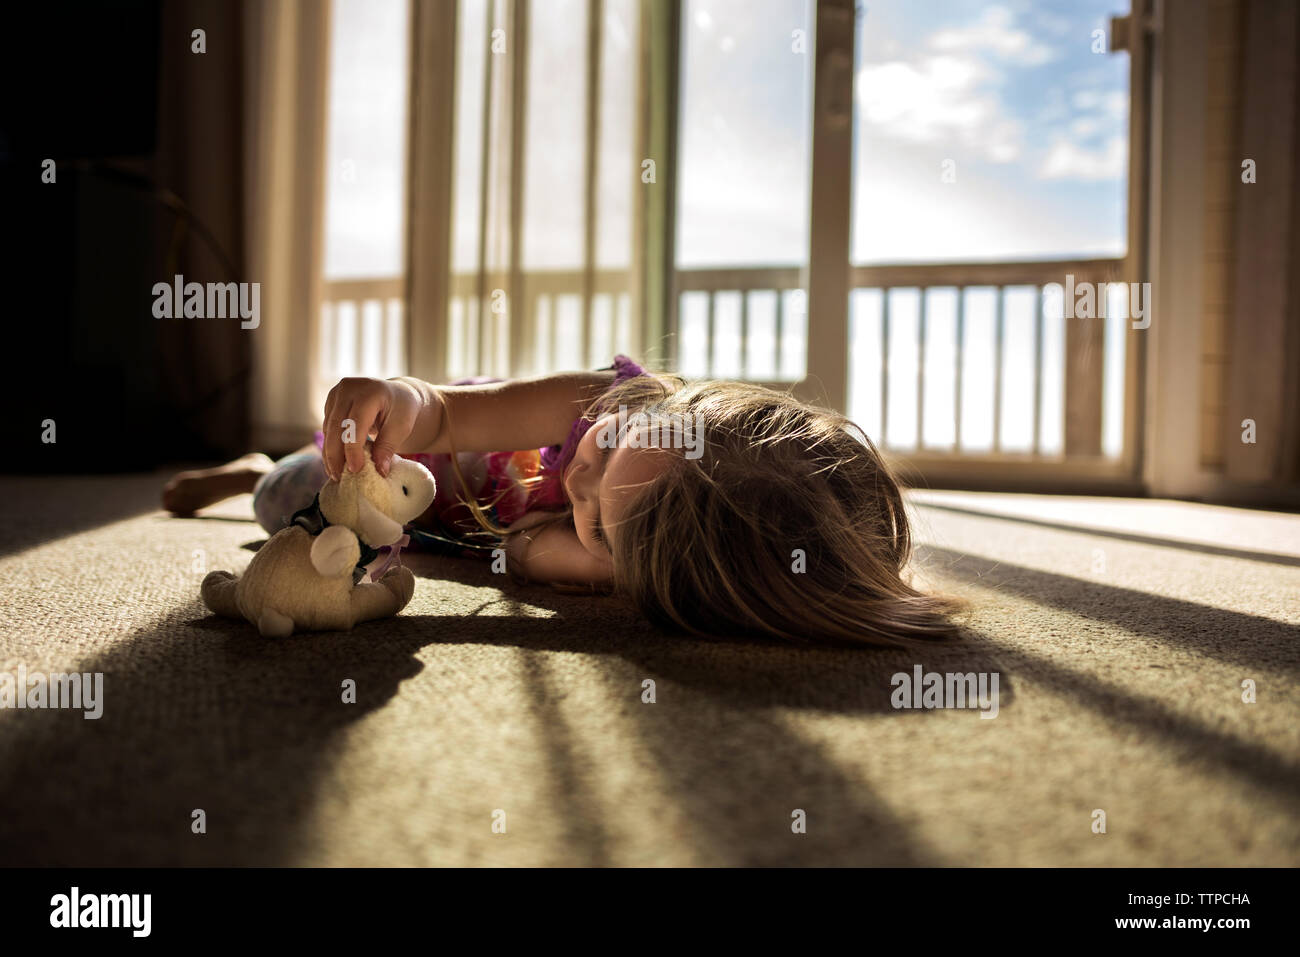 Young Girl Playing with stuffed animal dans la belle lumière du soleil Banque D'Images